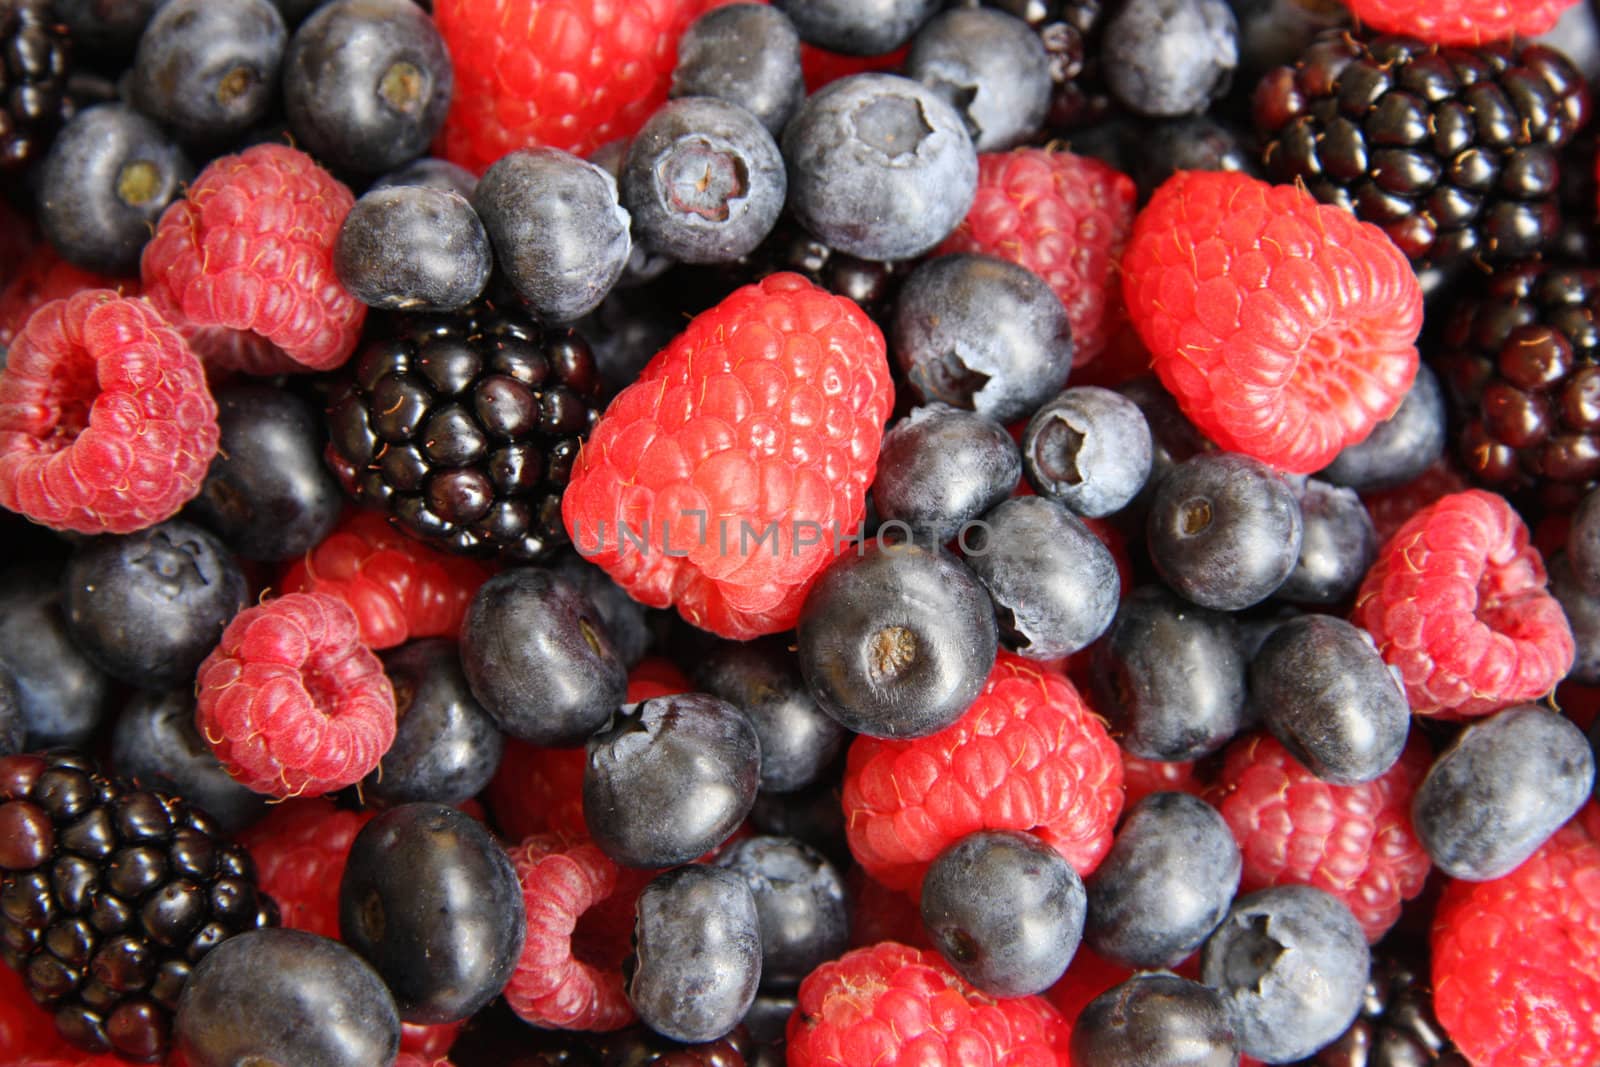 Mixed Berries 2  by raliand